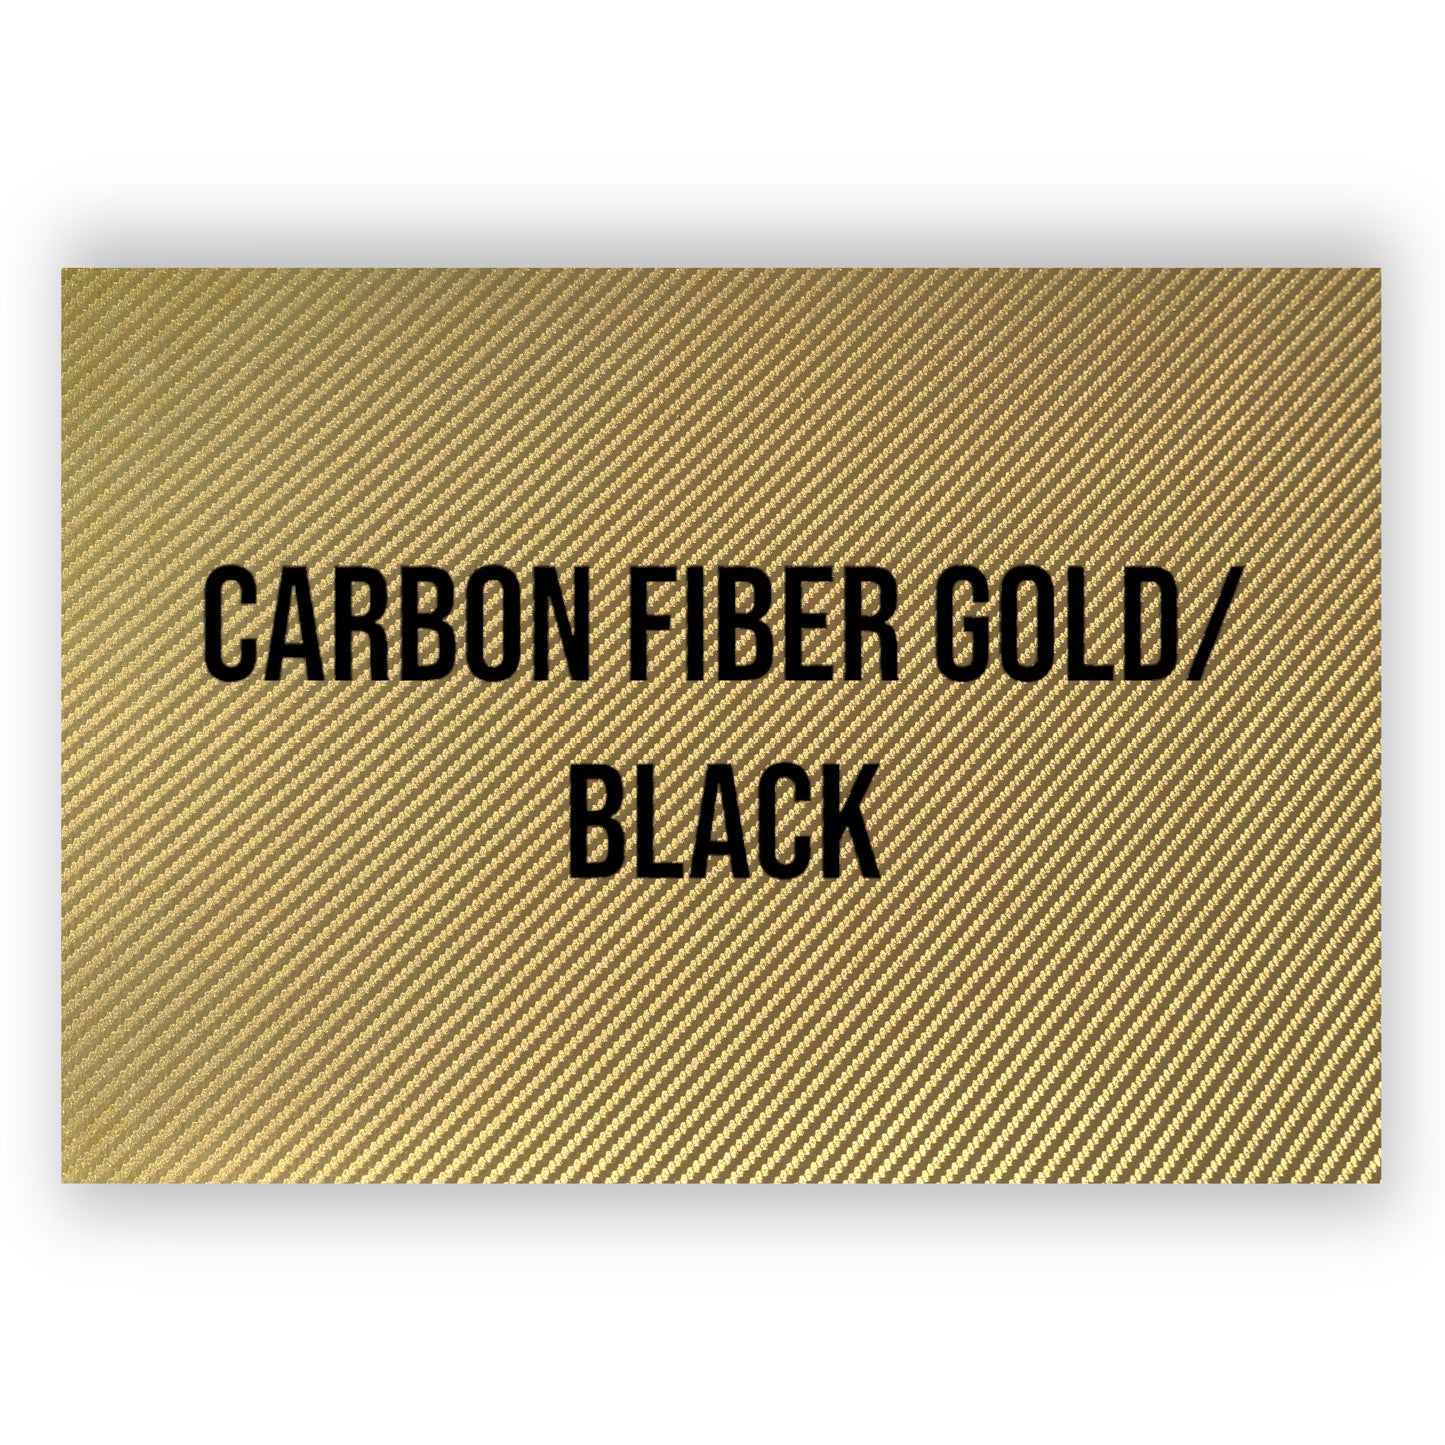 ULTRAHYD™ CARBON FIBER GOLD/BLACK HYDBOND LEATHERETTE SHEET (12"x24")